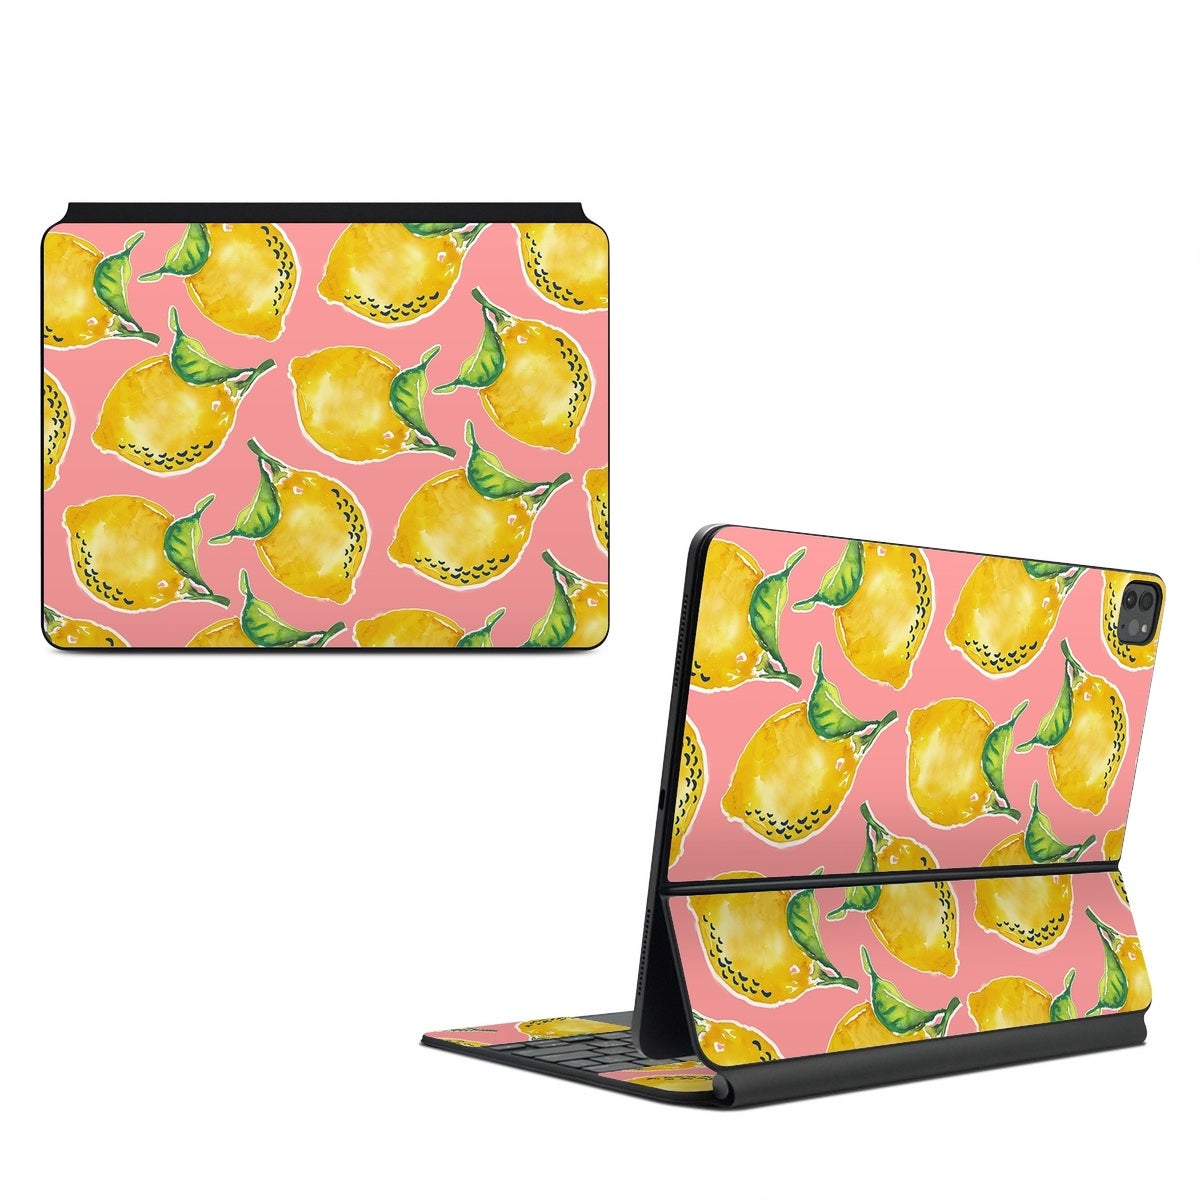 Lemon - Apple Magic Keyboard for iPad Skin